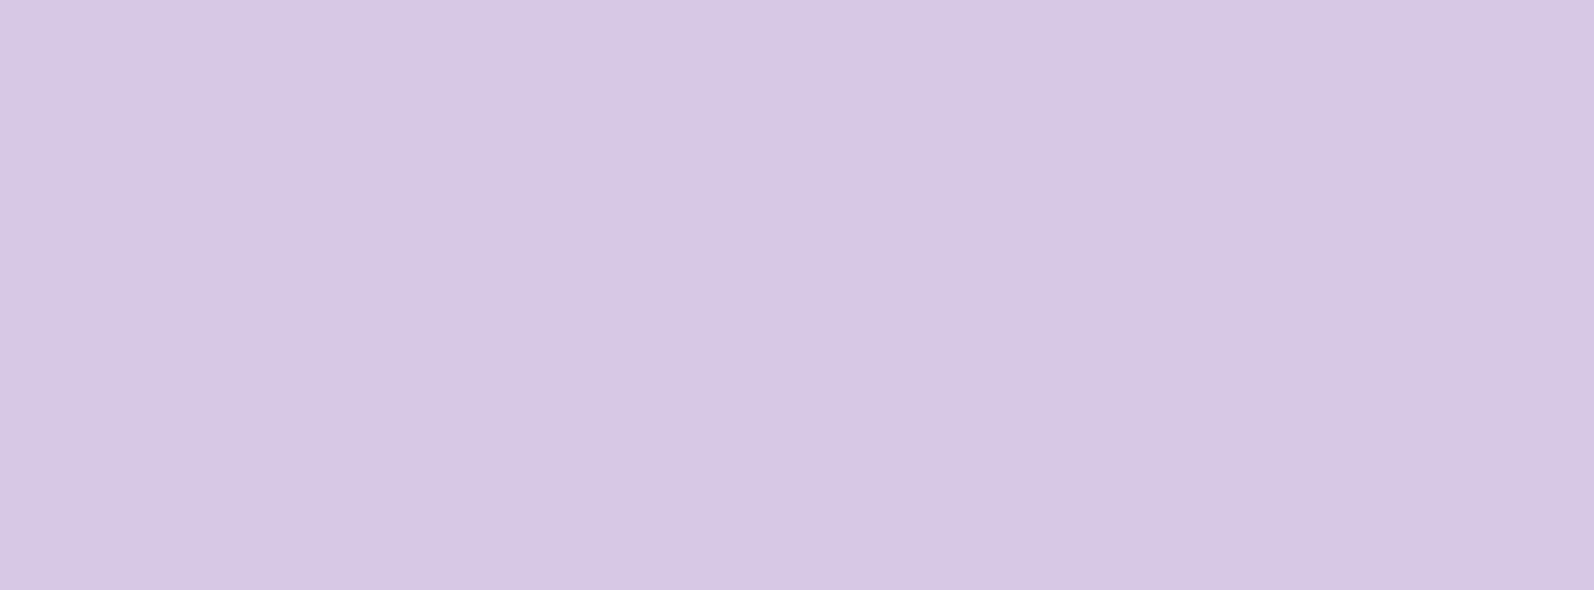 6669 - Lilac